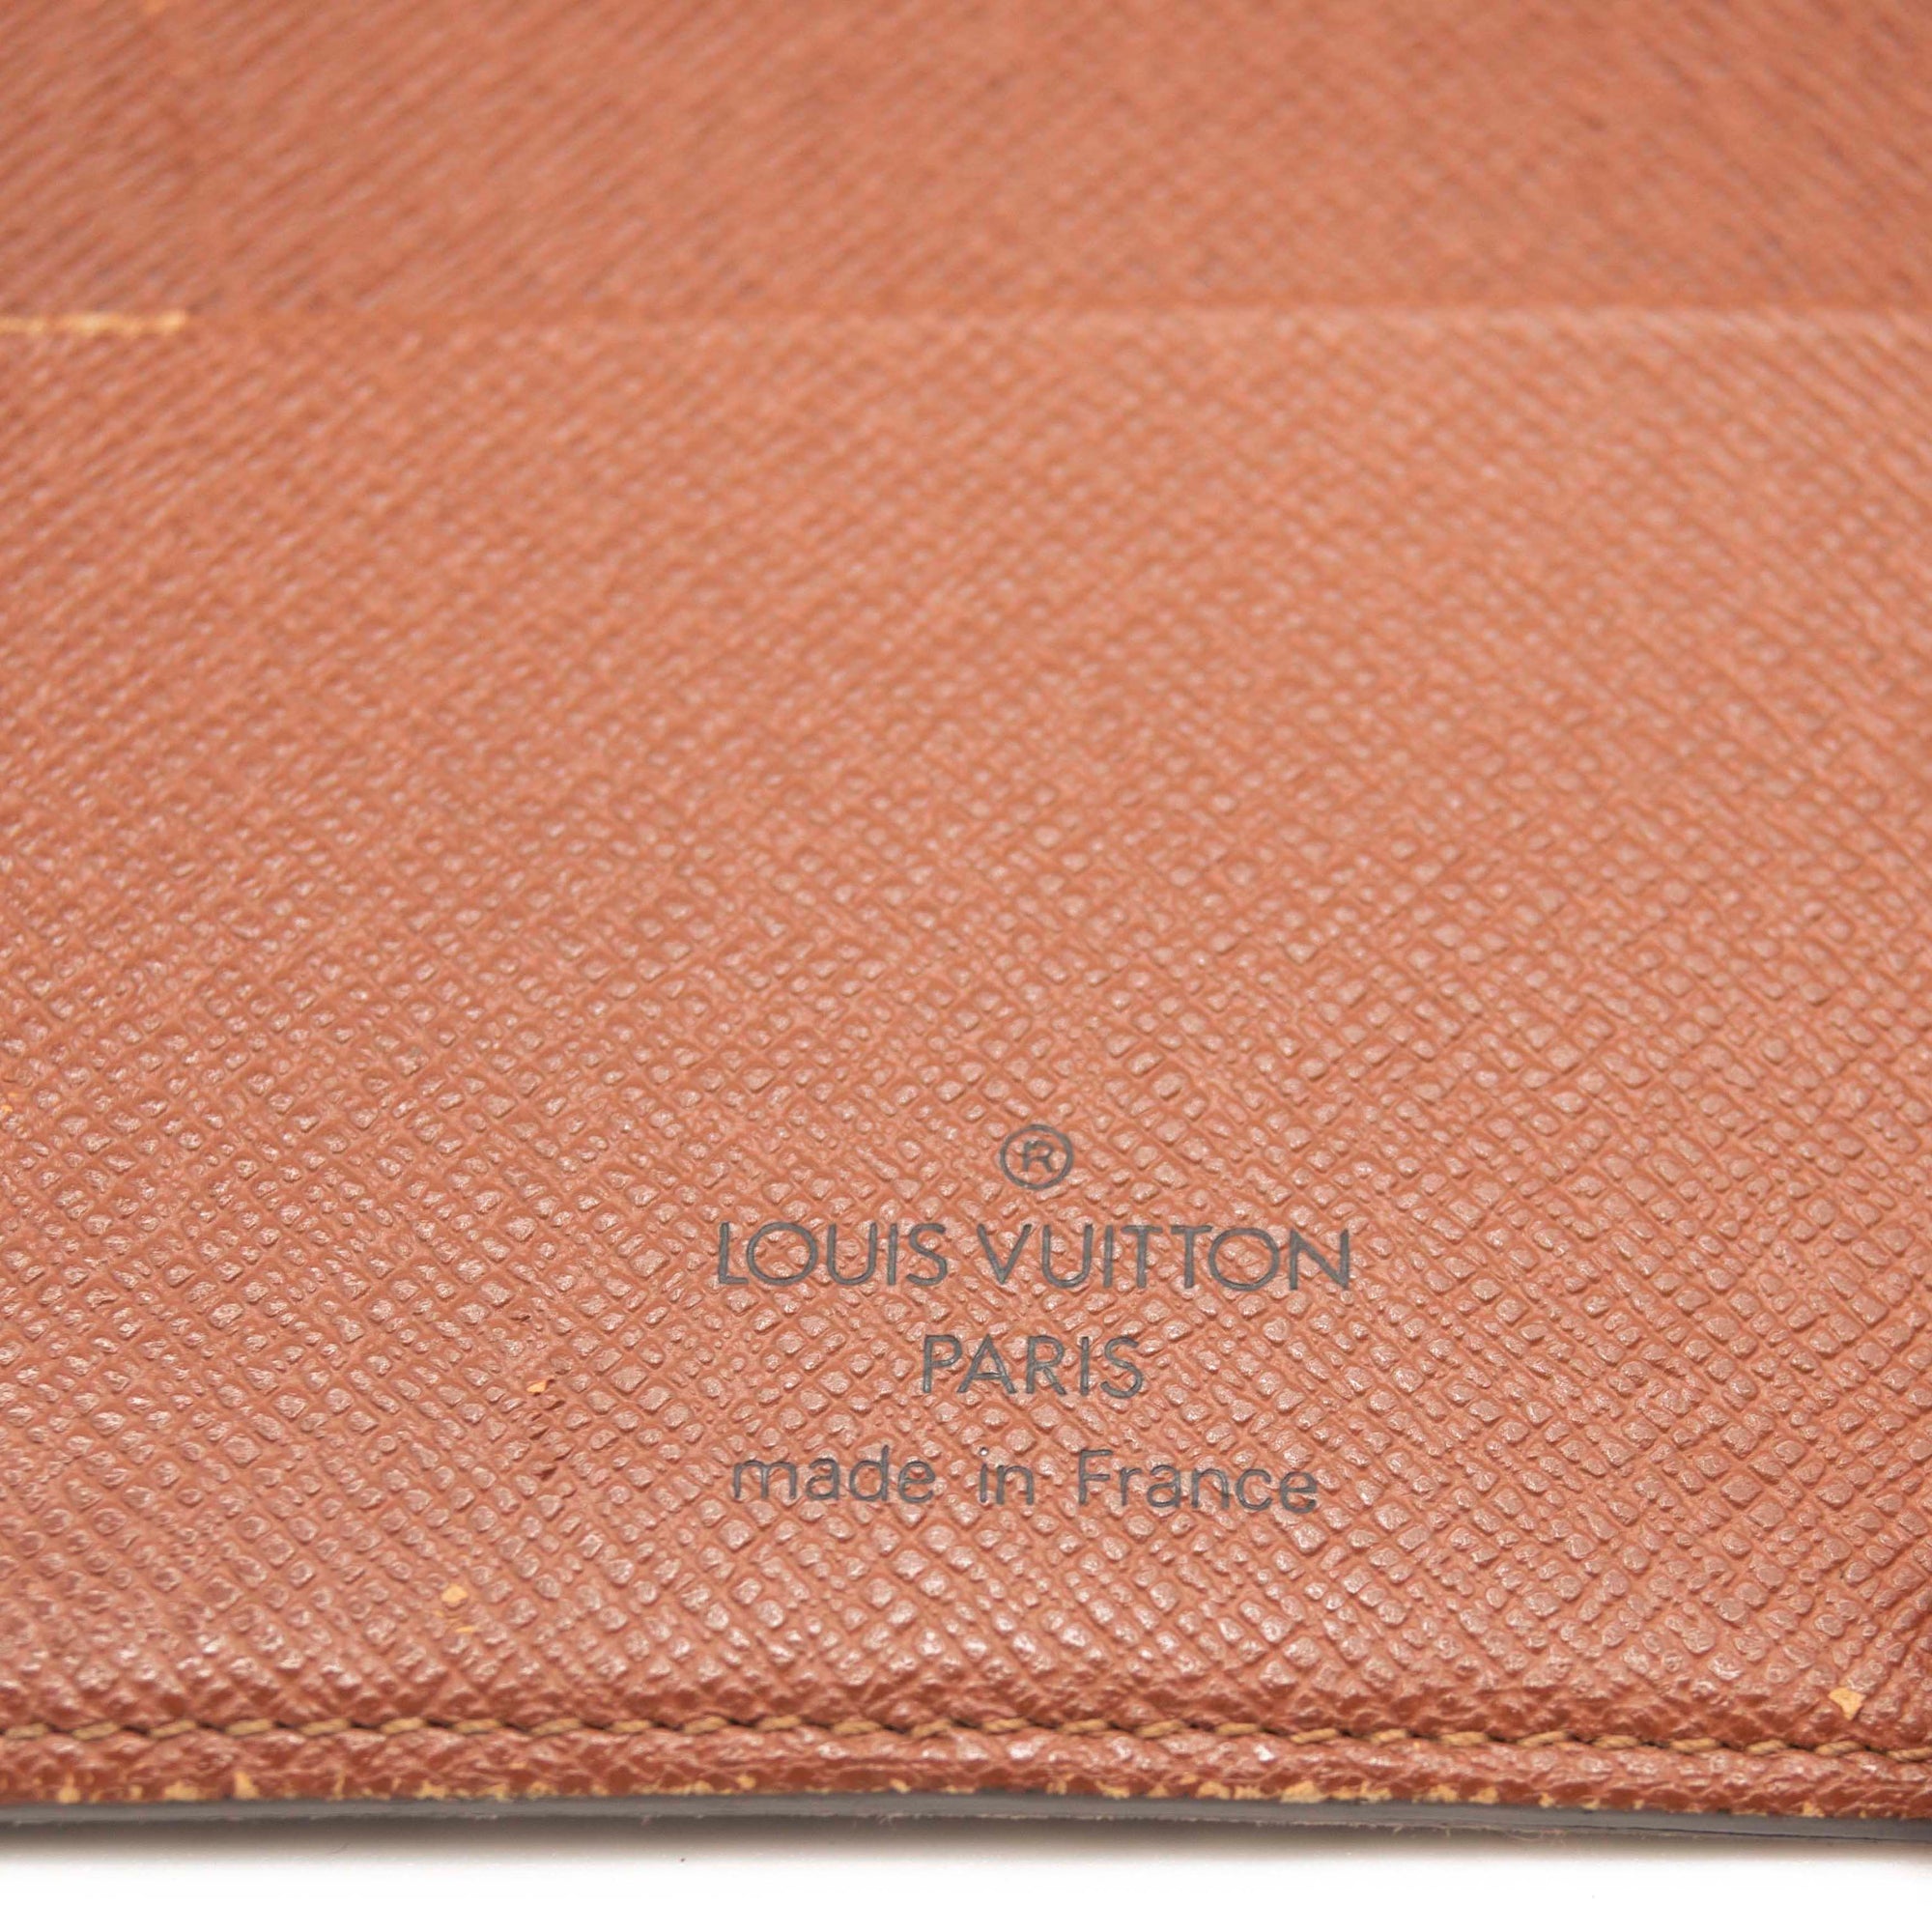 Louis+Vuitton+Monogram+Large+Ring+Agenda+Cover for sale online